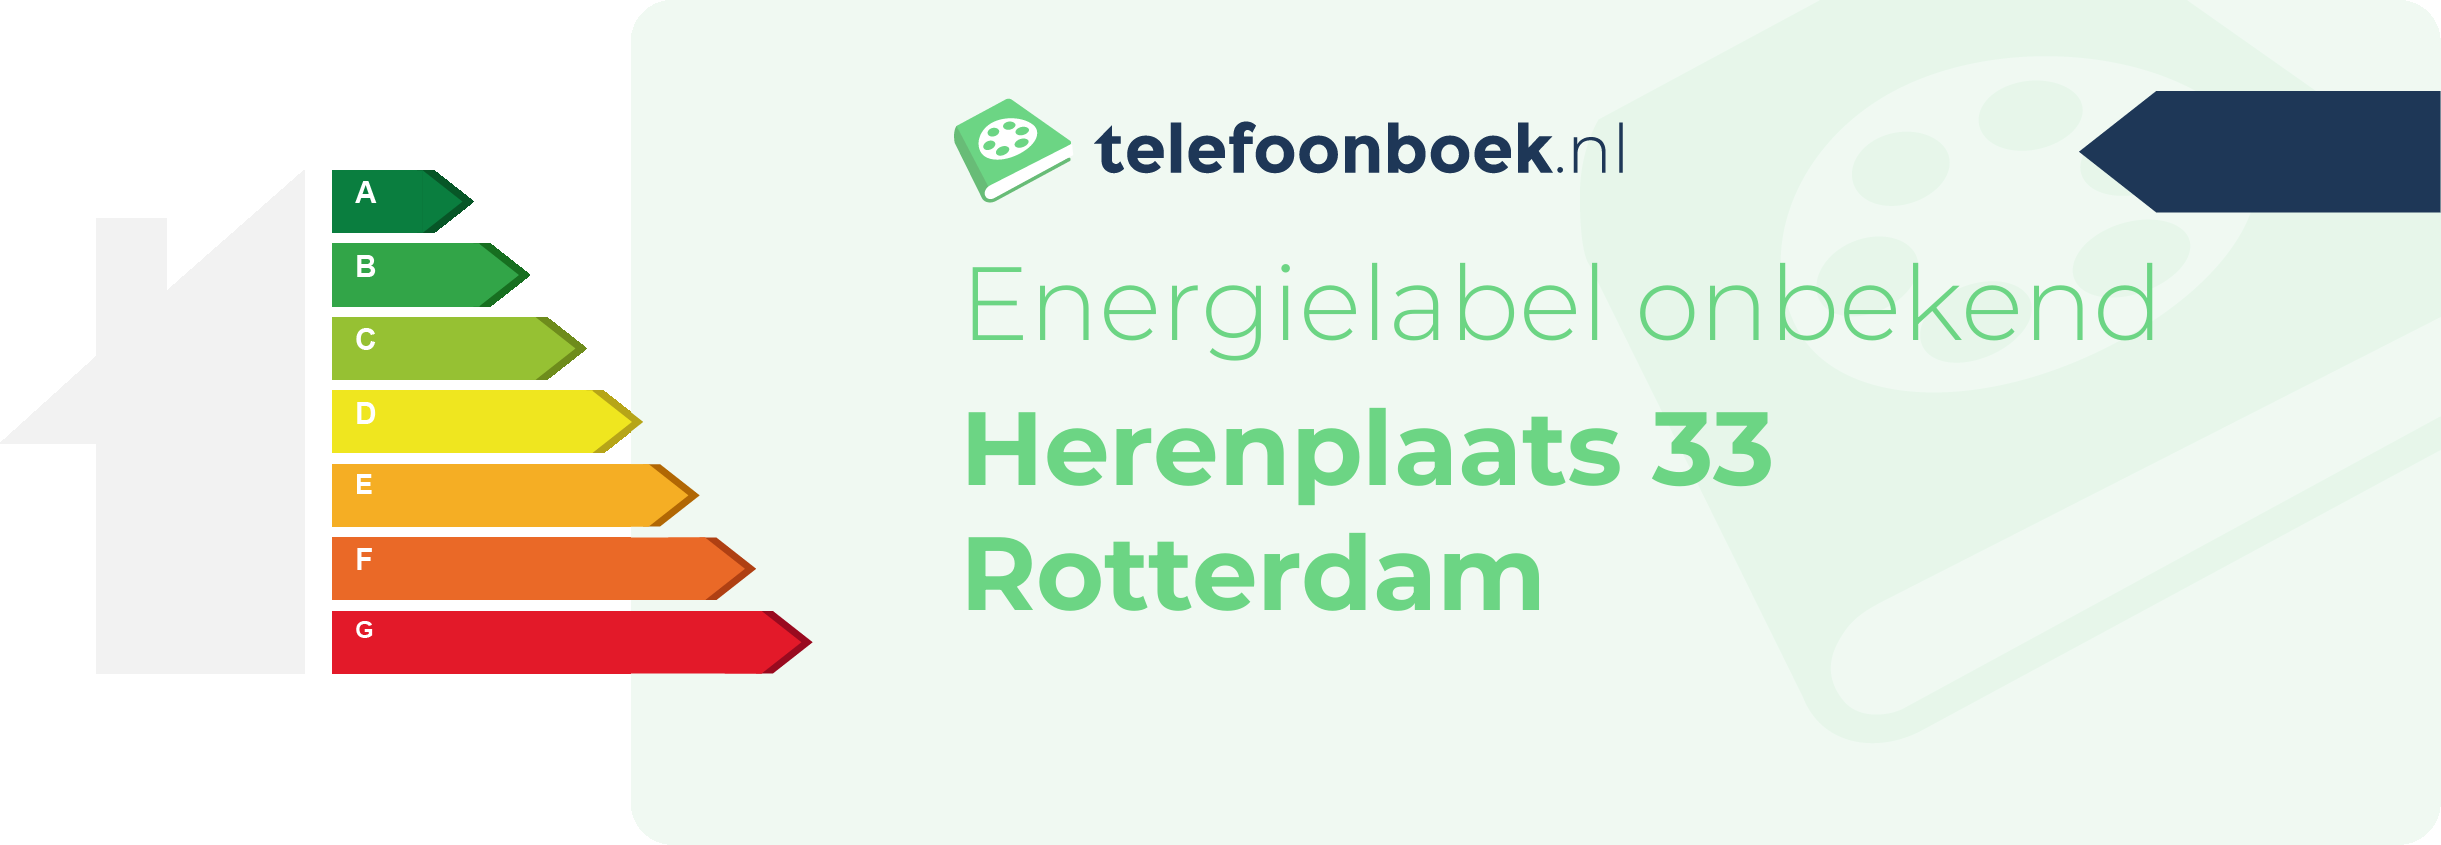 Energielabel Herenplaats 33 Rotterdam